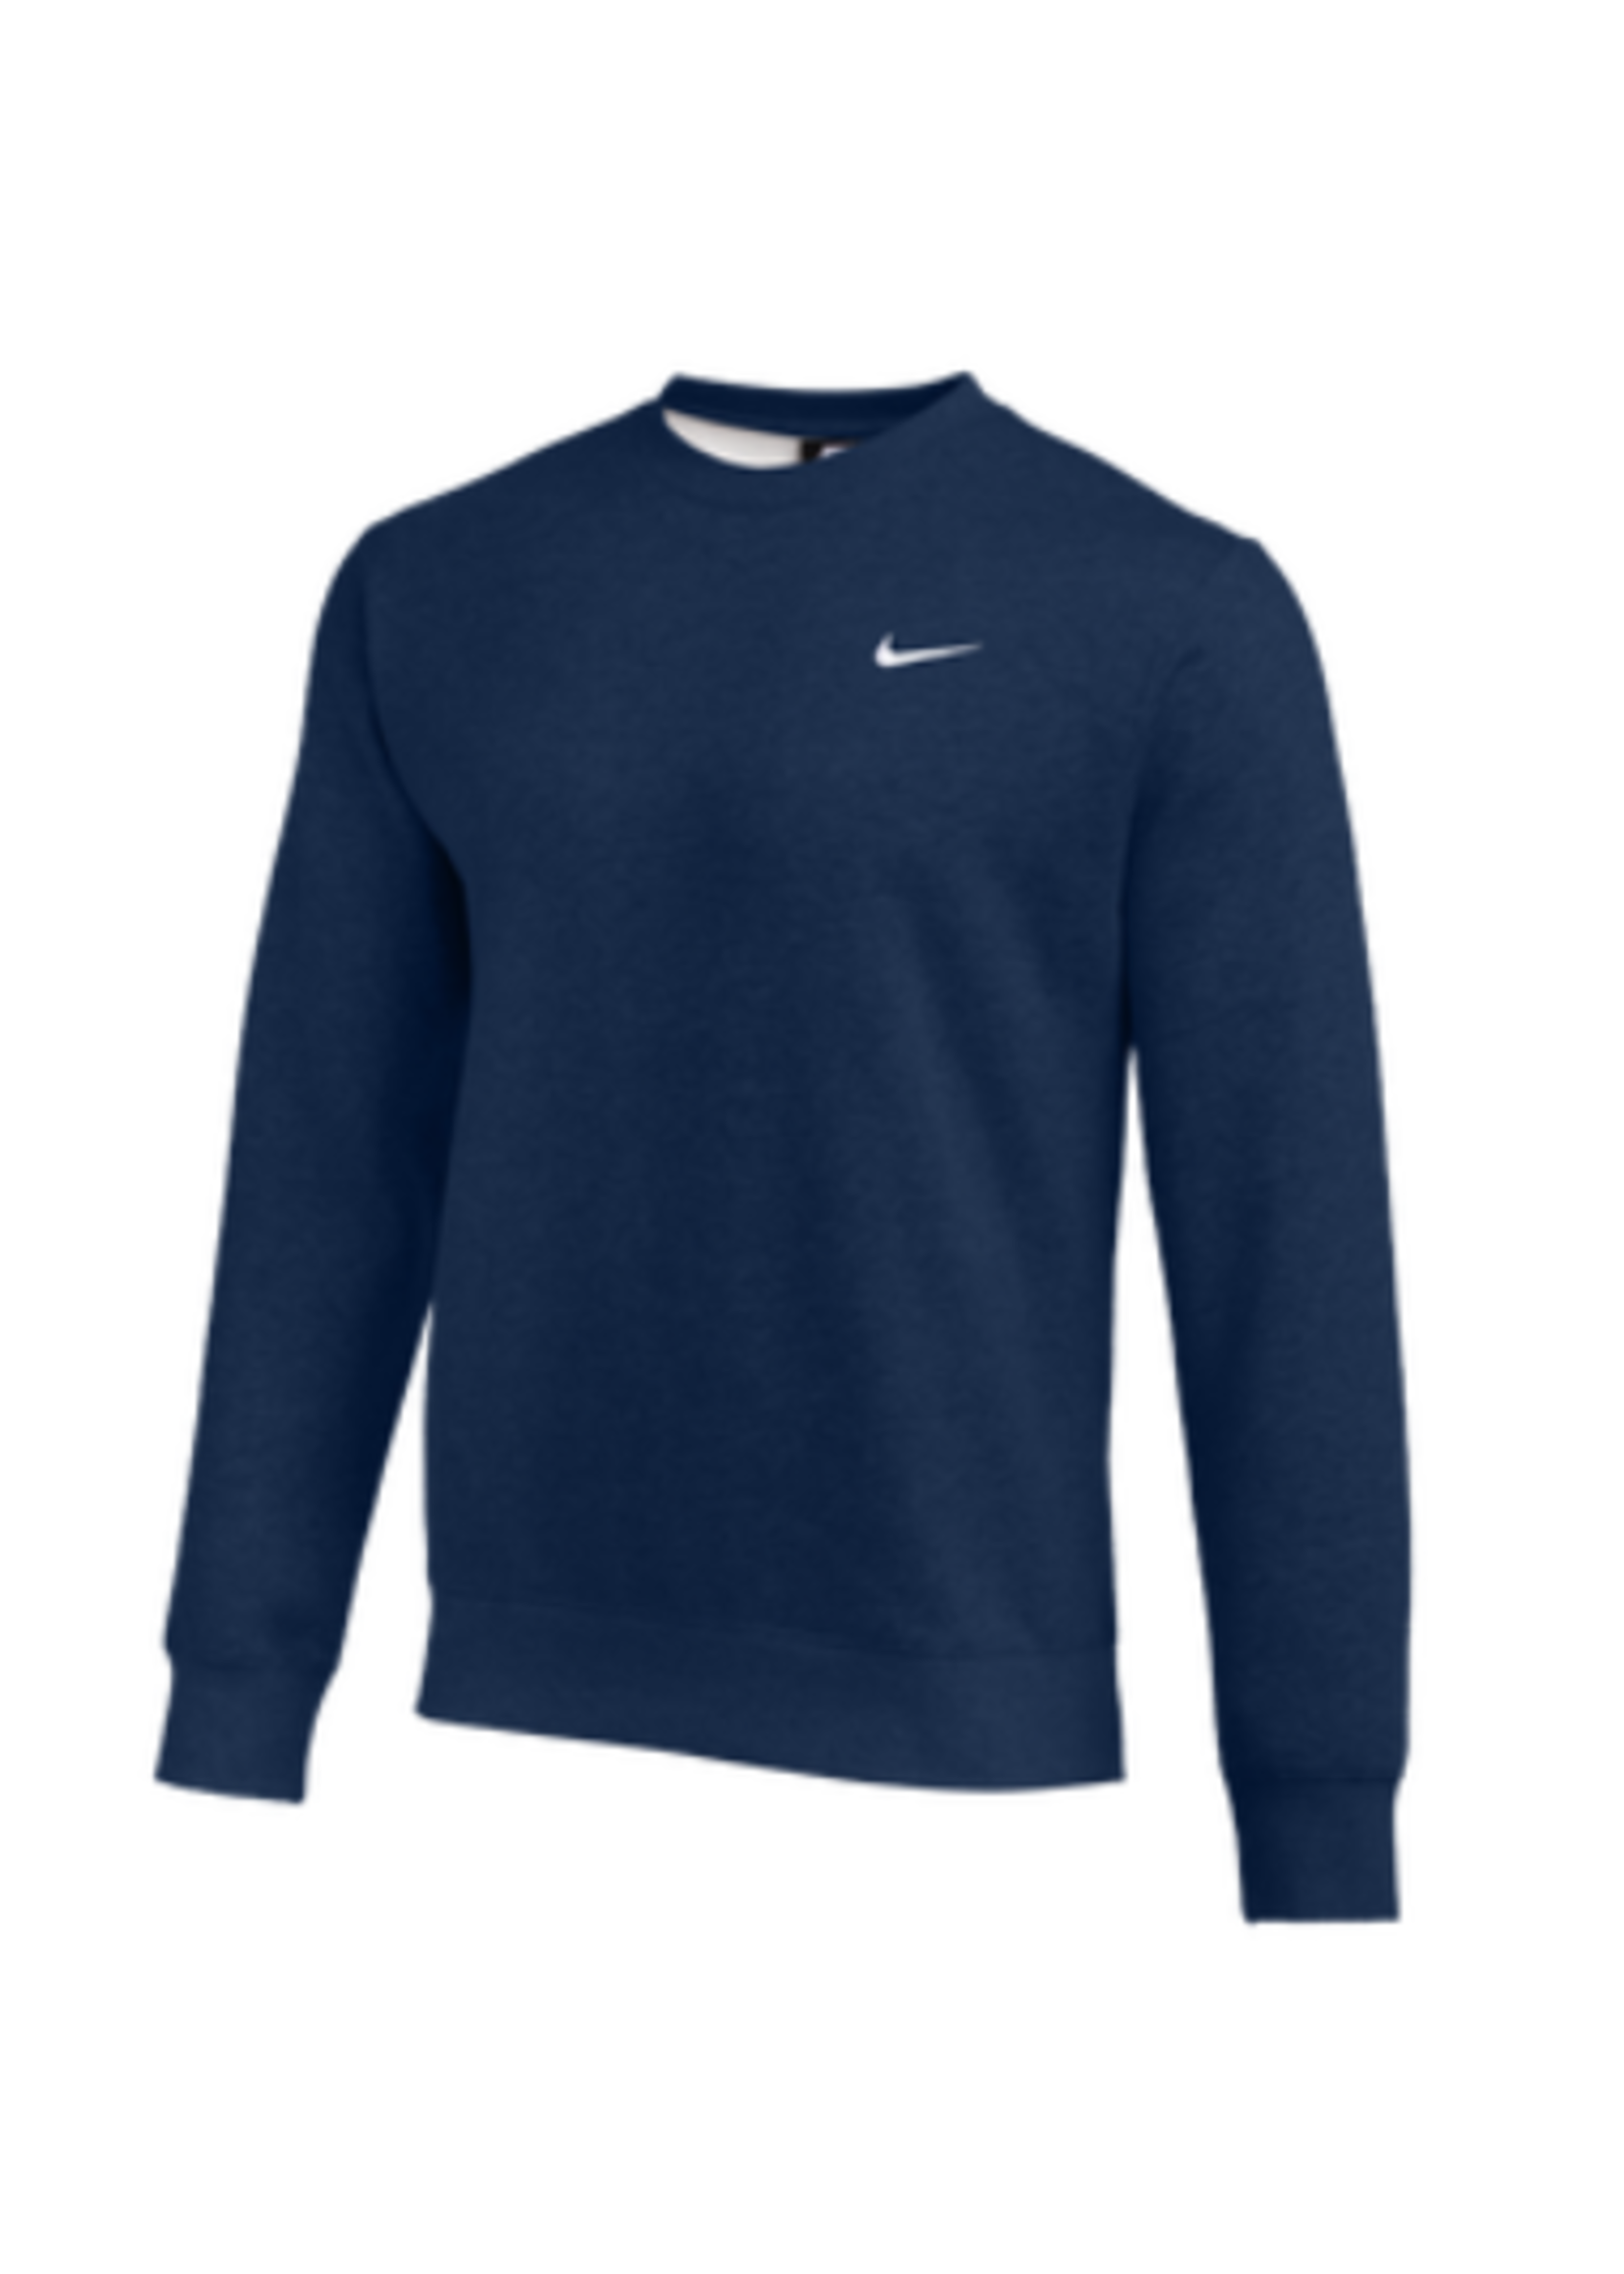 NON-UNIFORM Nike JD Crest Crewneck Sweatshirt, Unisex